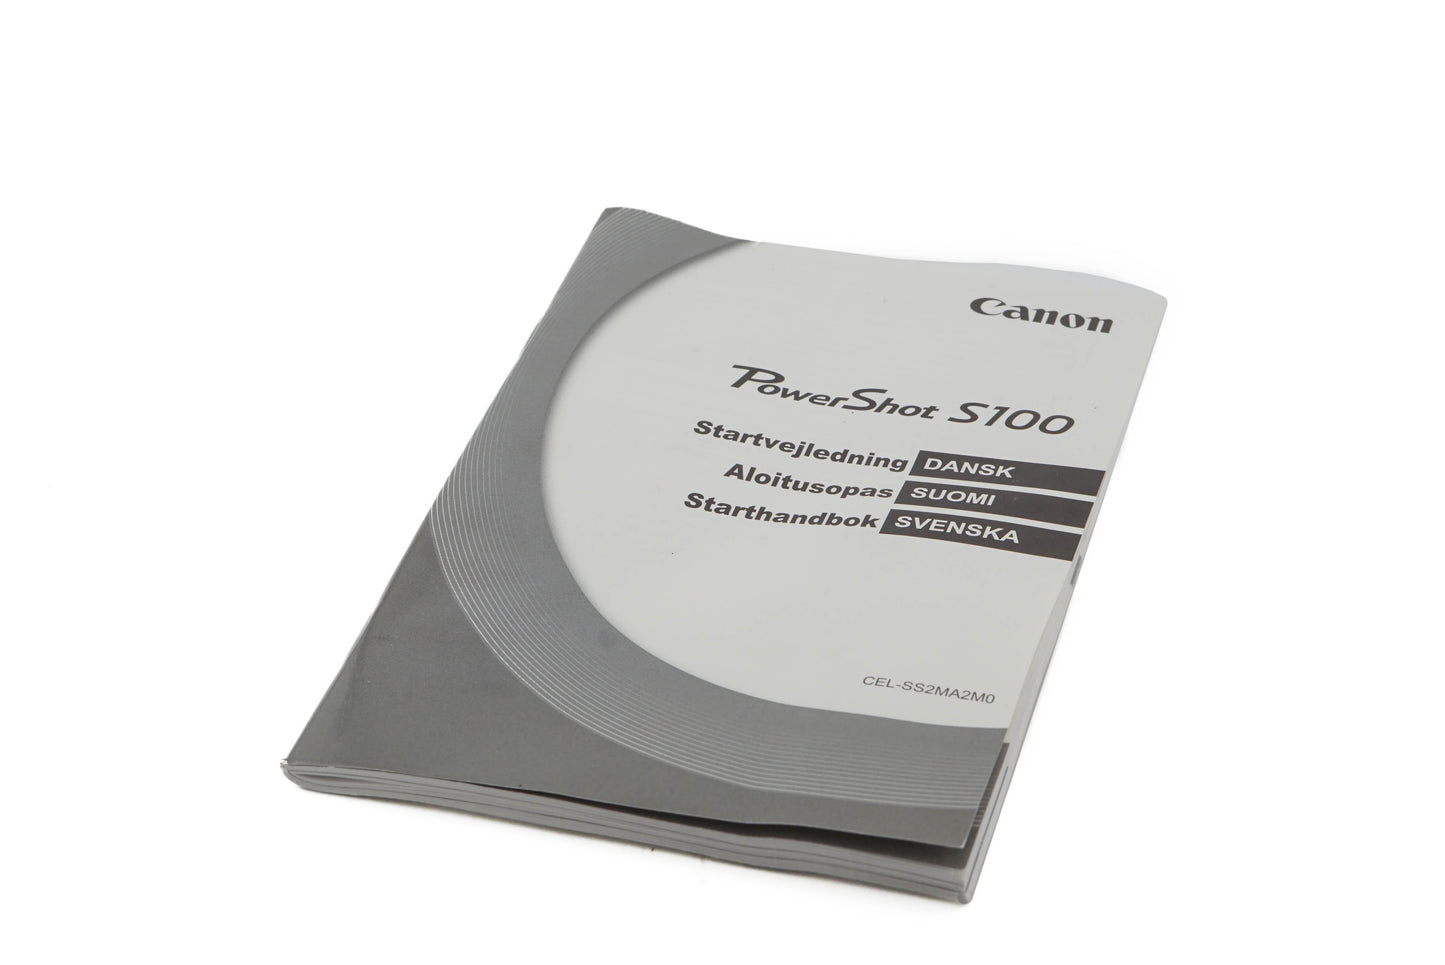 Canon Powershot S100 Instructions